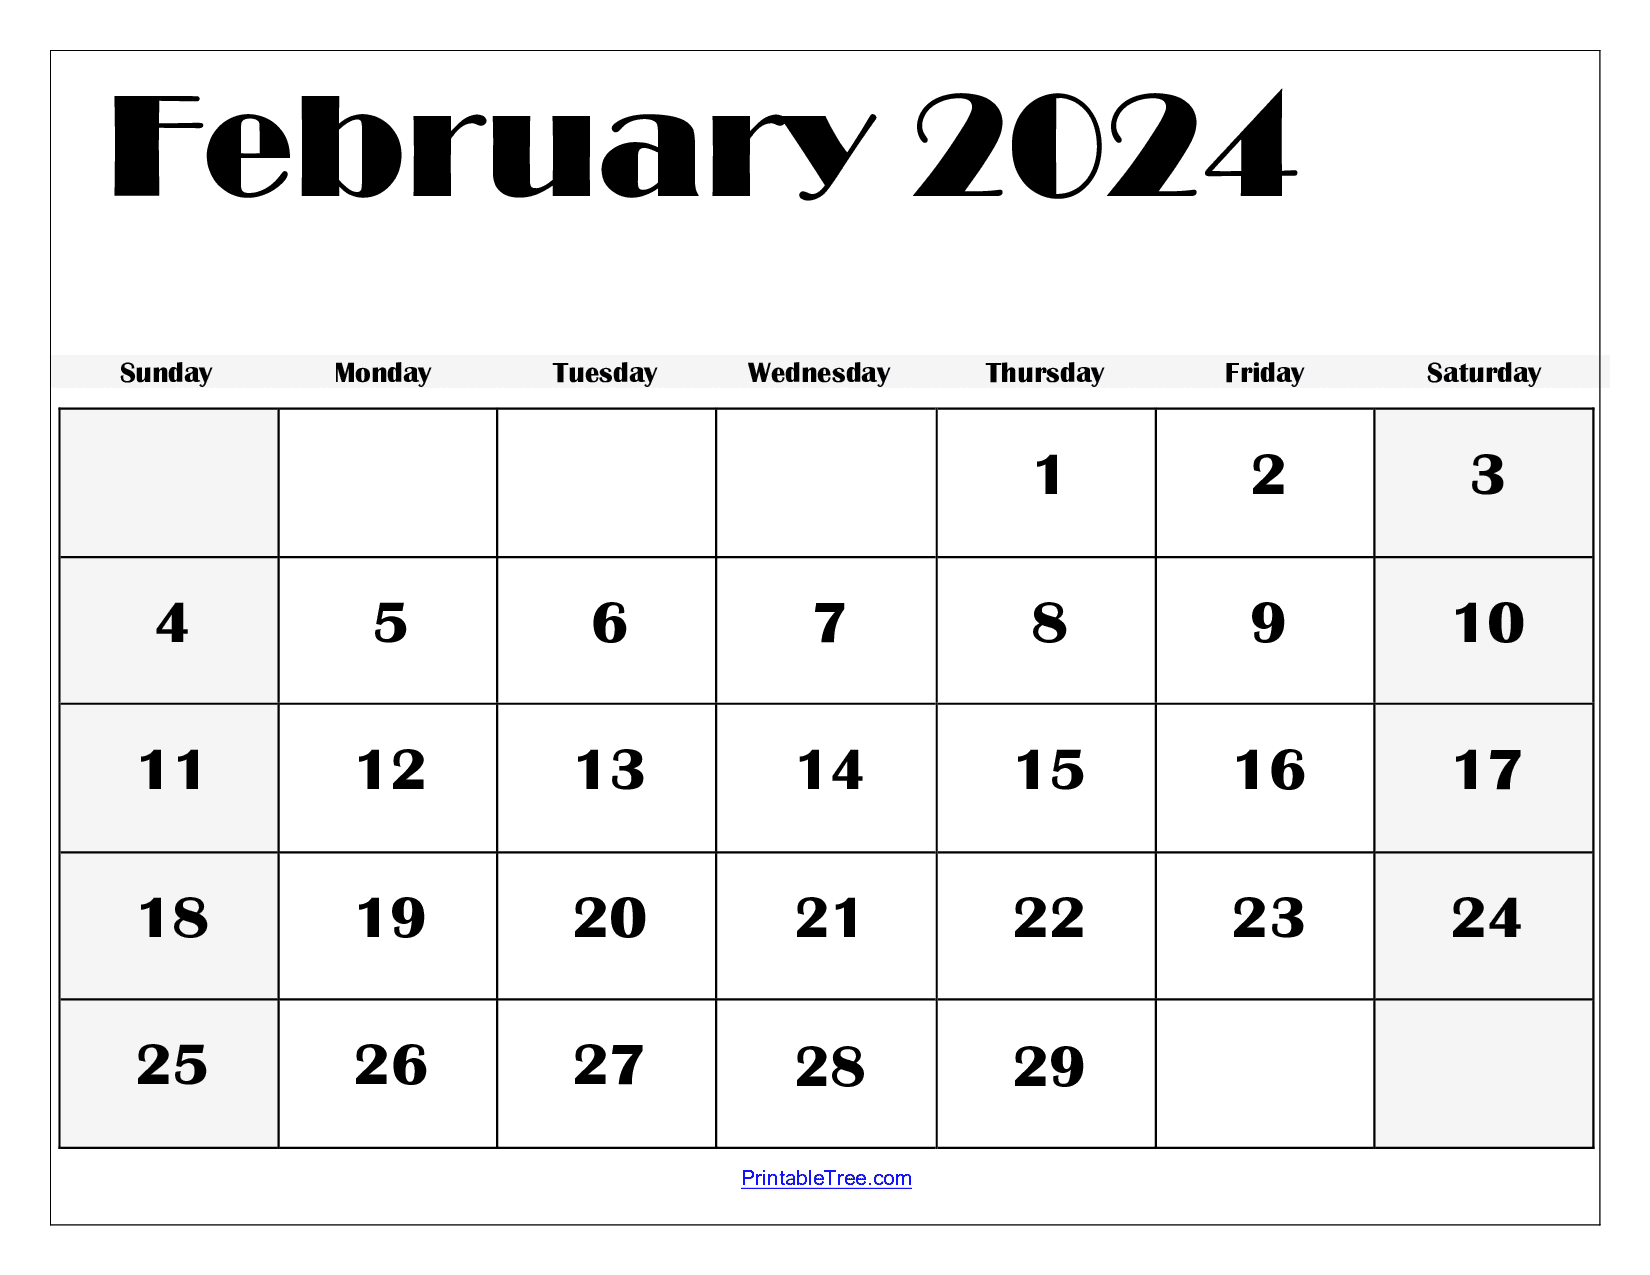 February 2024 Calendar Printable Pdf Template With Holidays for Free Printable Calendar February 2024 With Holidays